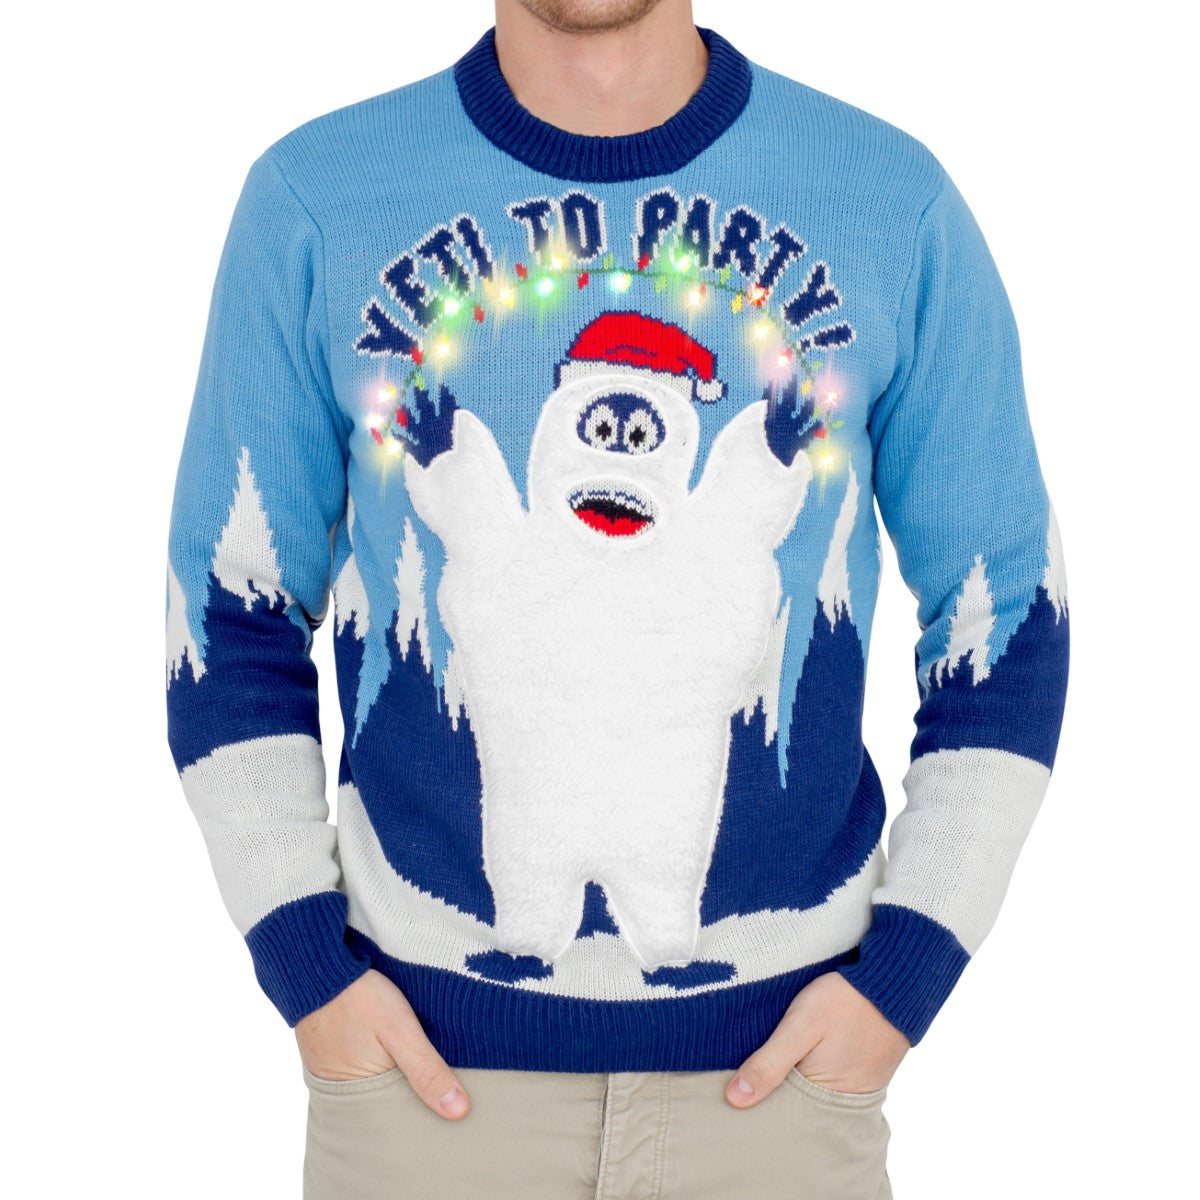 Yeti to Party Light up LED Ugly Christmas Sweater 1